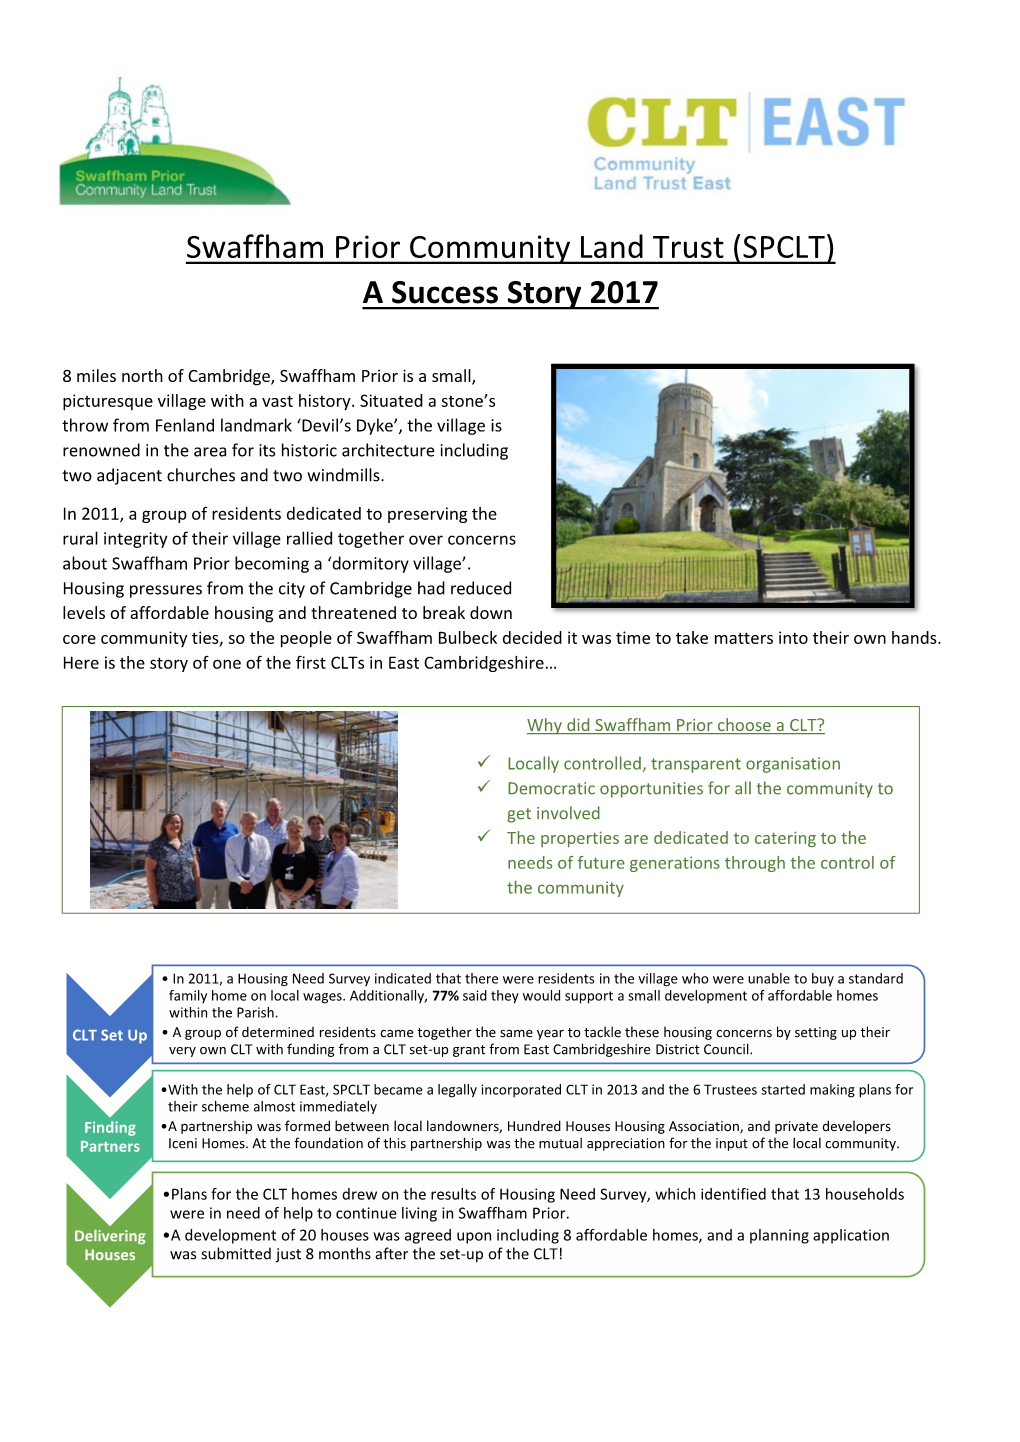 Swaffham Prior Community Land Trust (SPCLT) a Success Story 2017